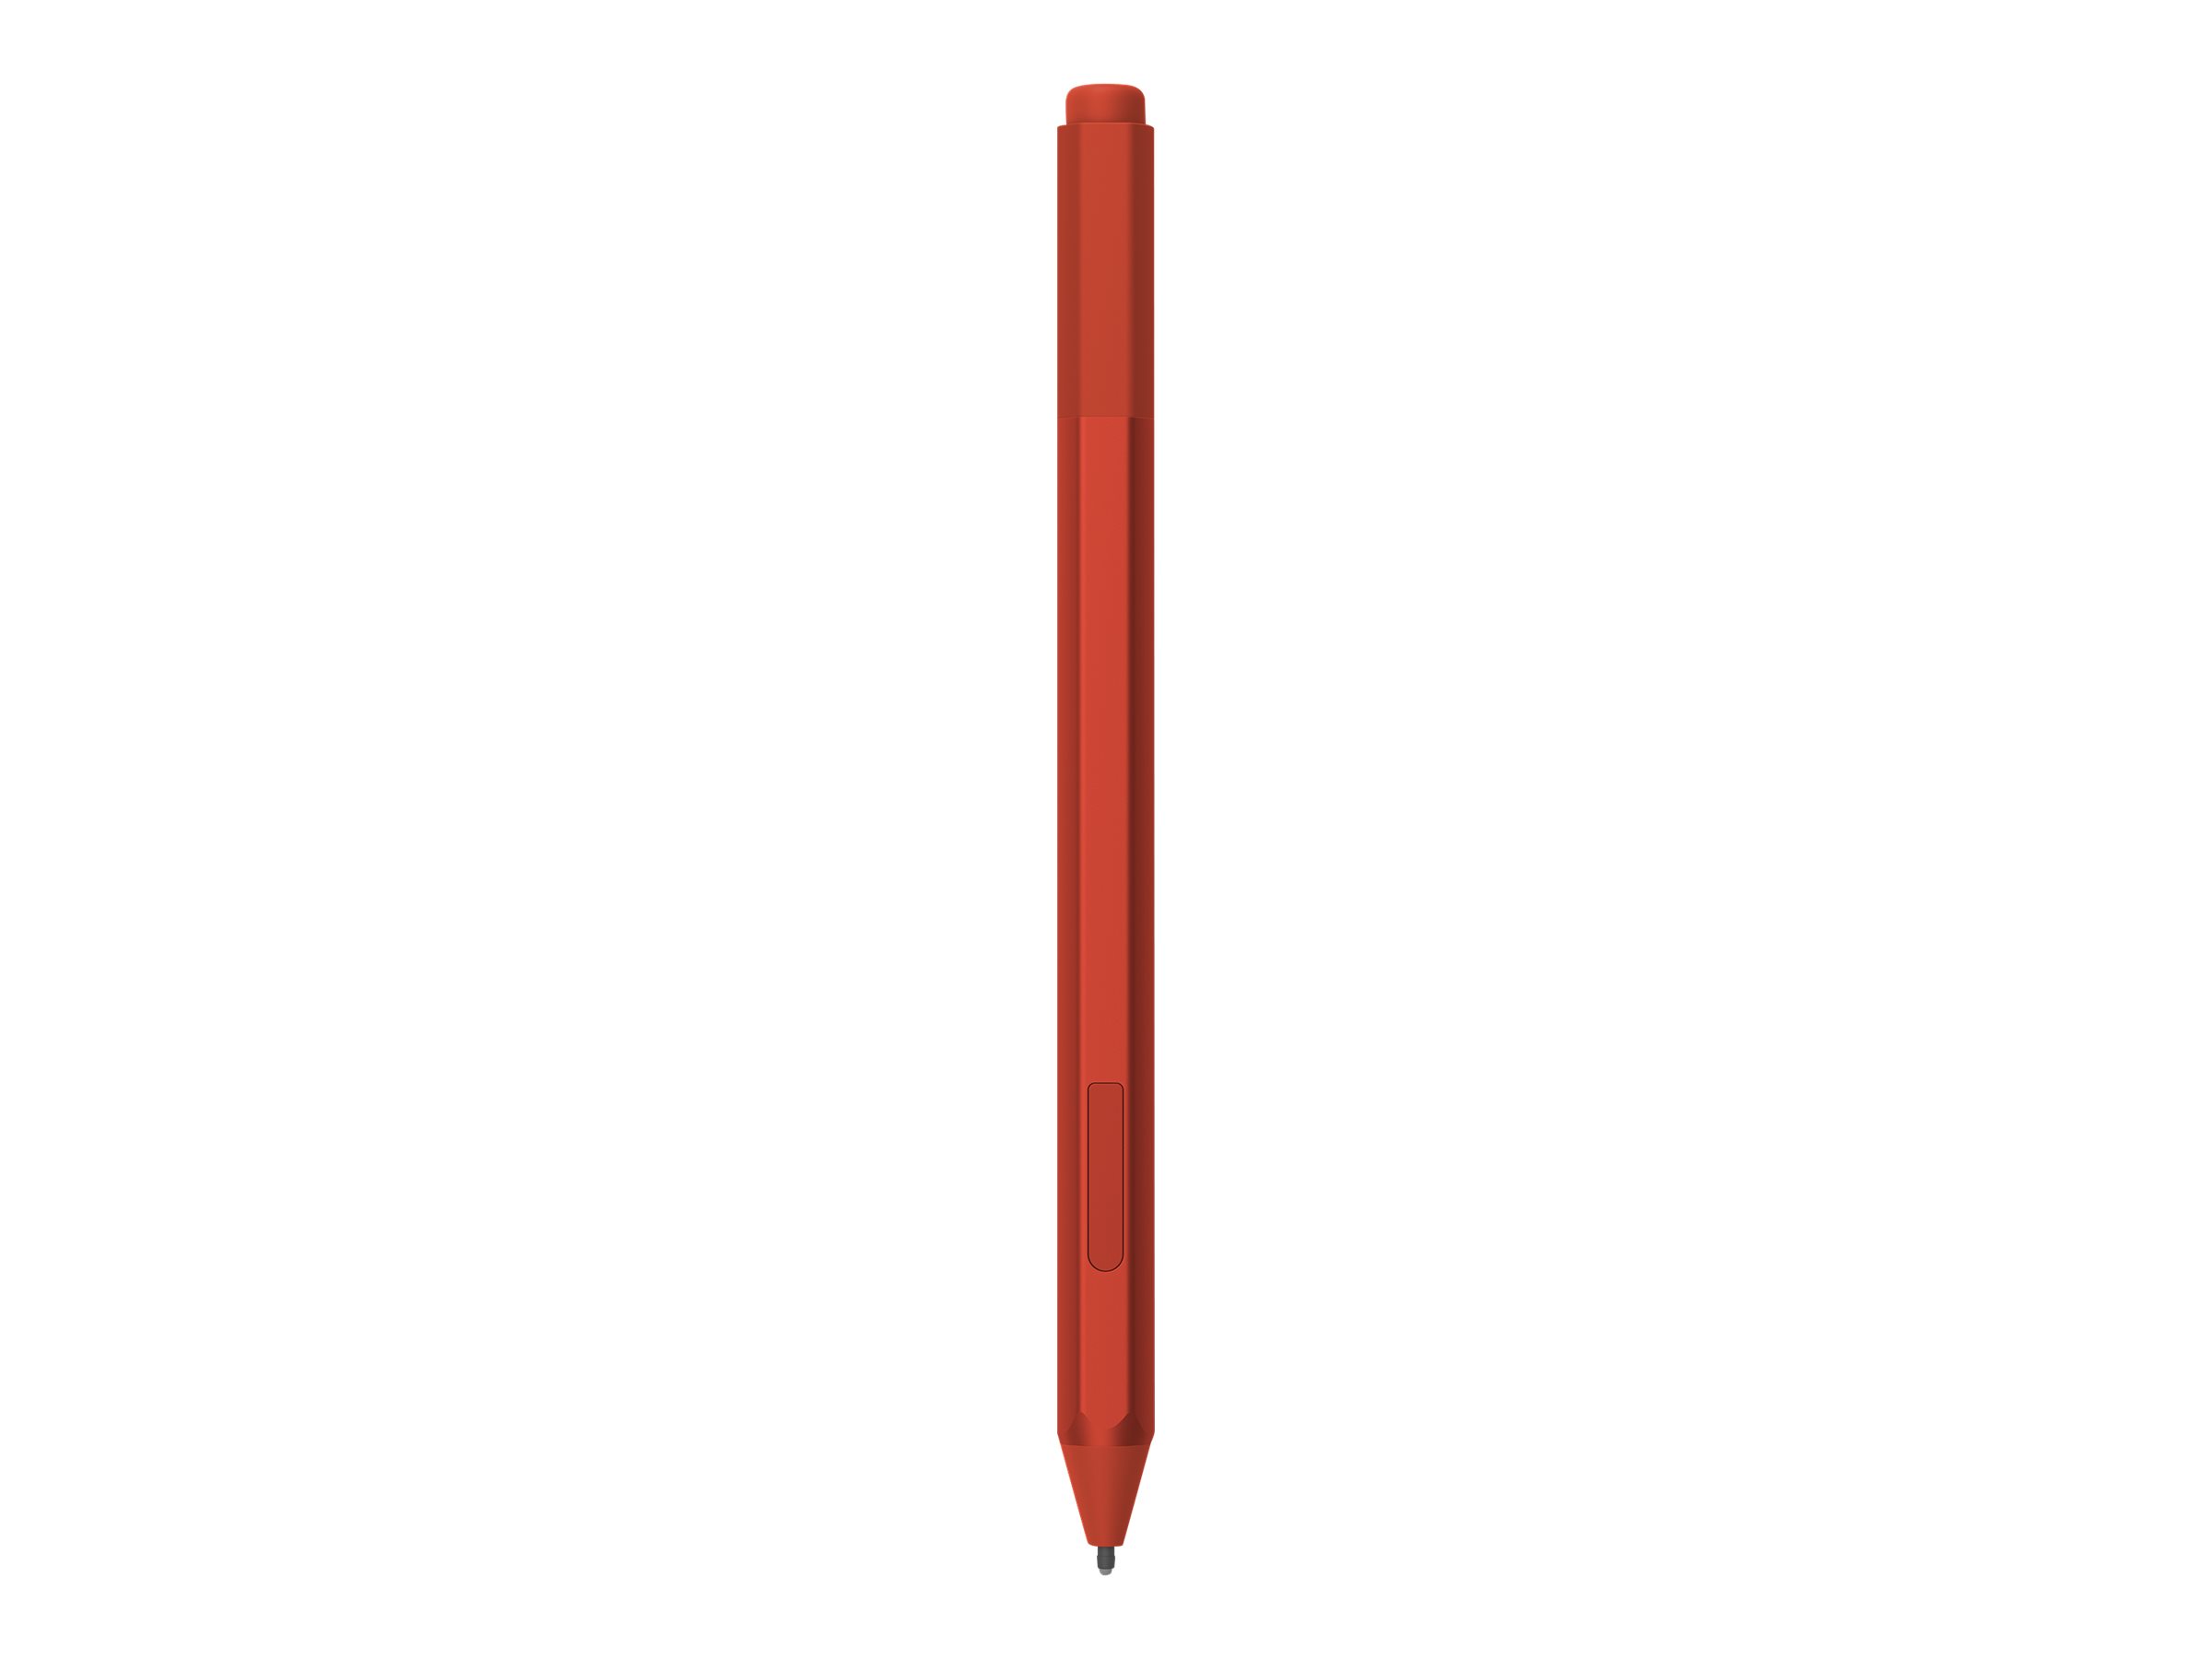 Microsoft Surface Pen M1776 - Stylet actif - 2 boutons - Bluetooth 4.0 - rouge coquelicot - commercial - pour Surface Book 3, Go 2, Go 3, Go 4, Laptop 3, Laptop 4, Laptop 5, Pro 7, Pro 7+, Studio 2+ - EYV-00042 - Dispositifs de pointage